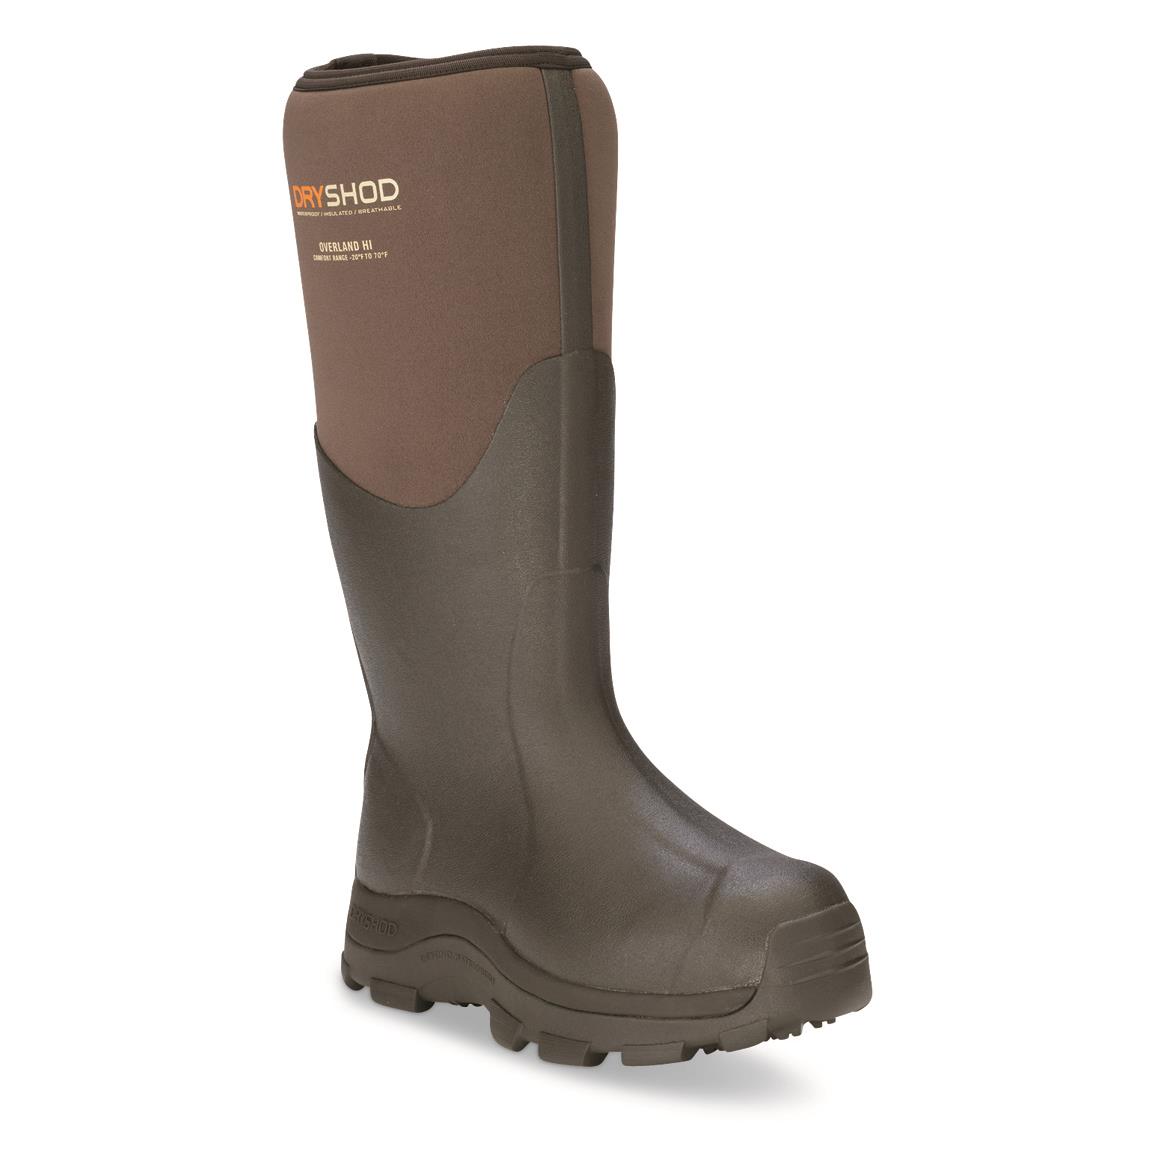 DryShod Overland High Premium Men's Neoprene Rubber Sport Boots, -20°F, Khaki